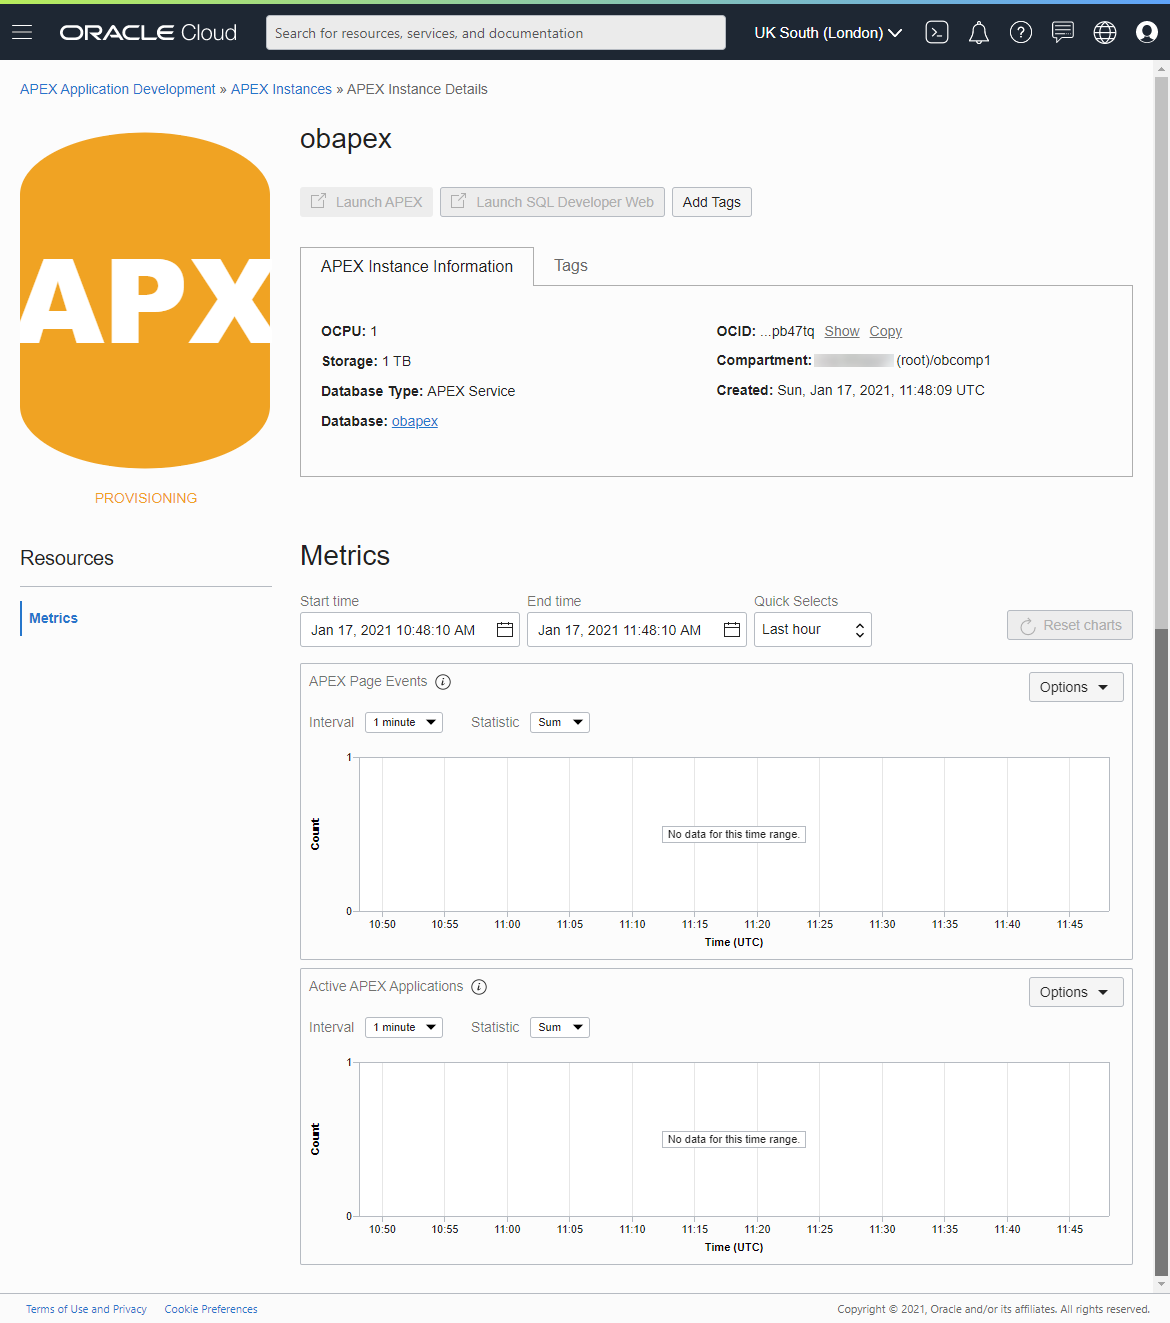 APEX Application Development Service : Provisioning